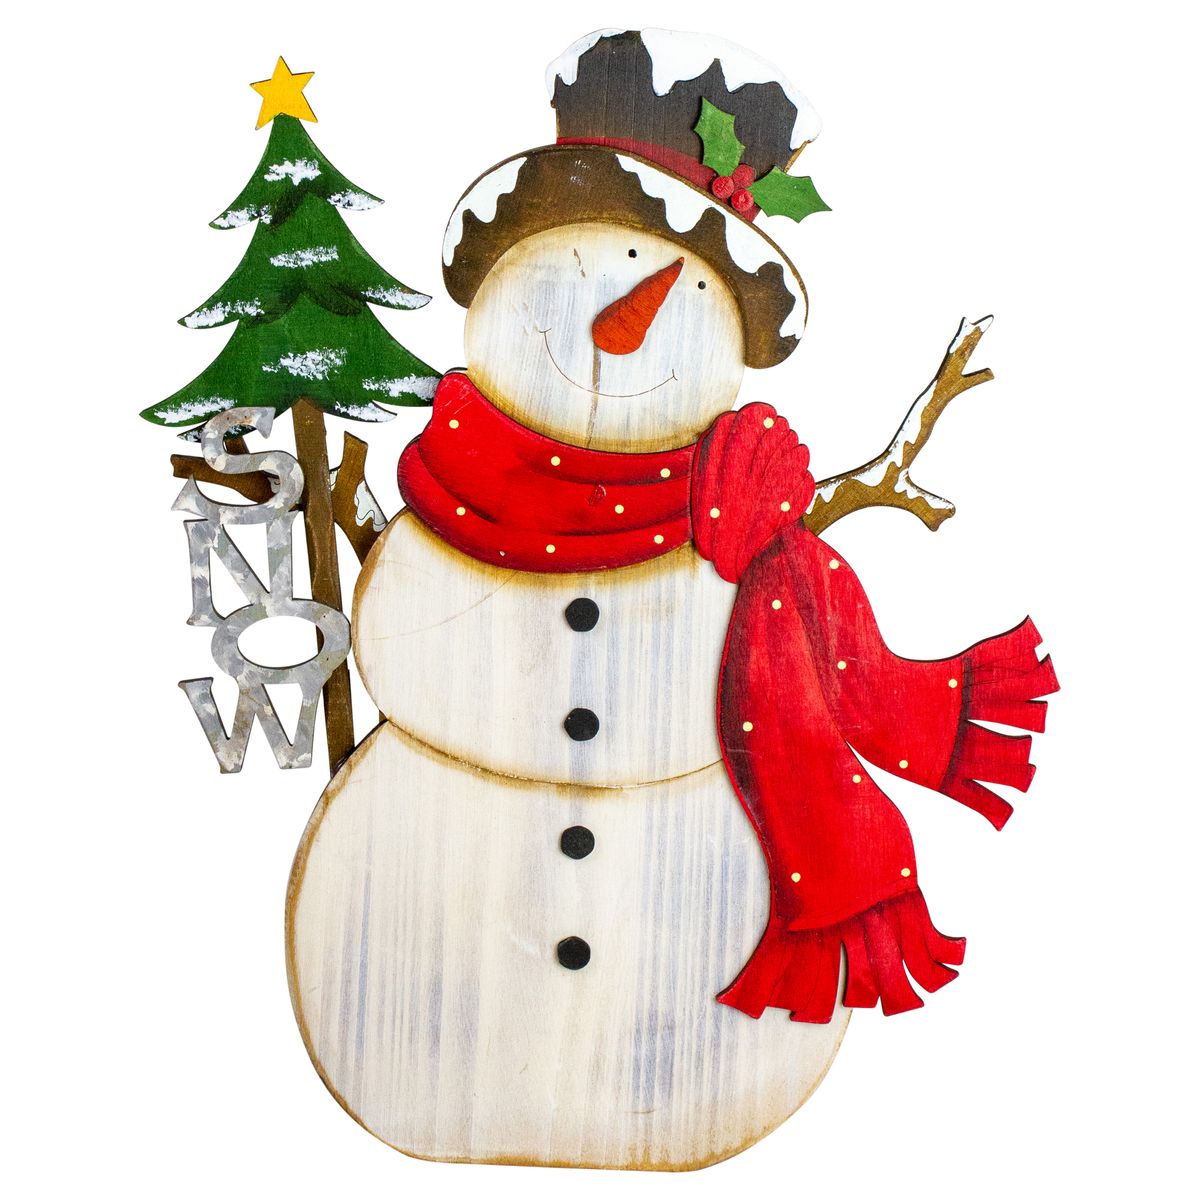 [RDY] [送料無料] 18インチ スノーマン with 'スノー' サイン 木製クリスマスデコレーション [楽天海外通販] | 18" Snowman with 'Snow' Sign Wooden Christmas Decoration